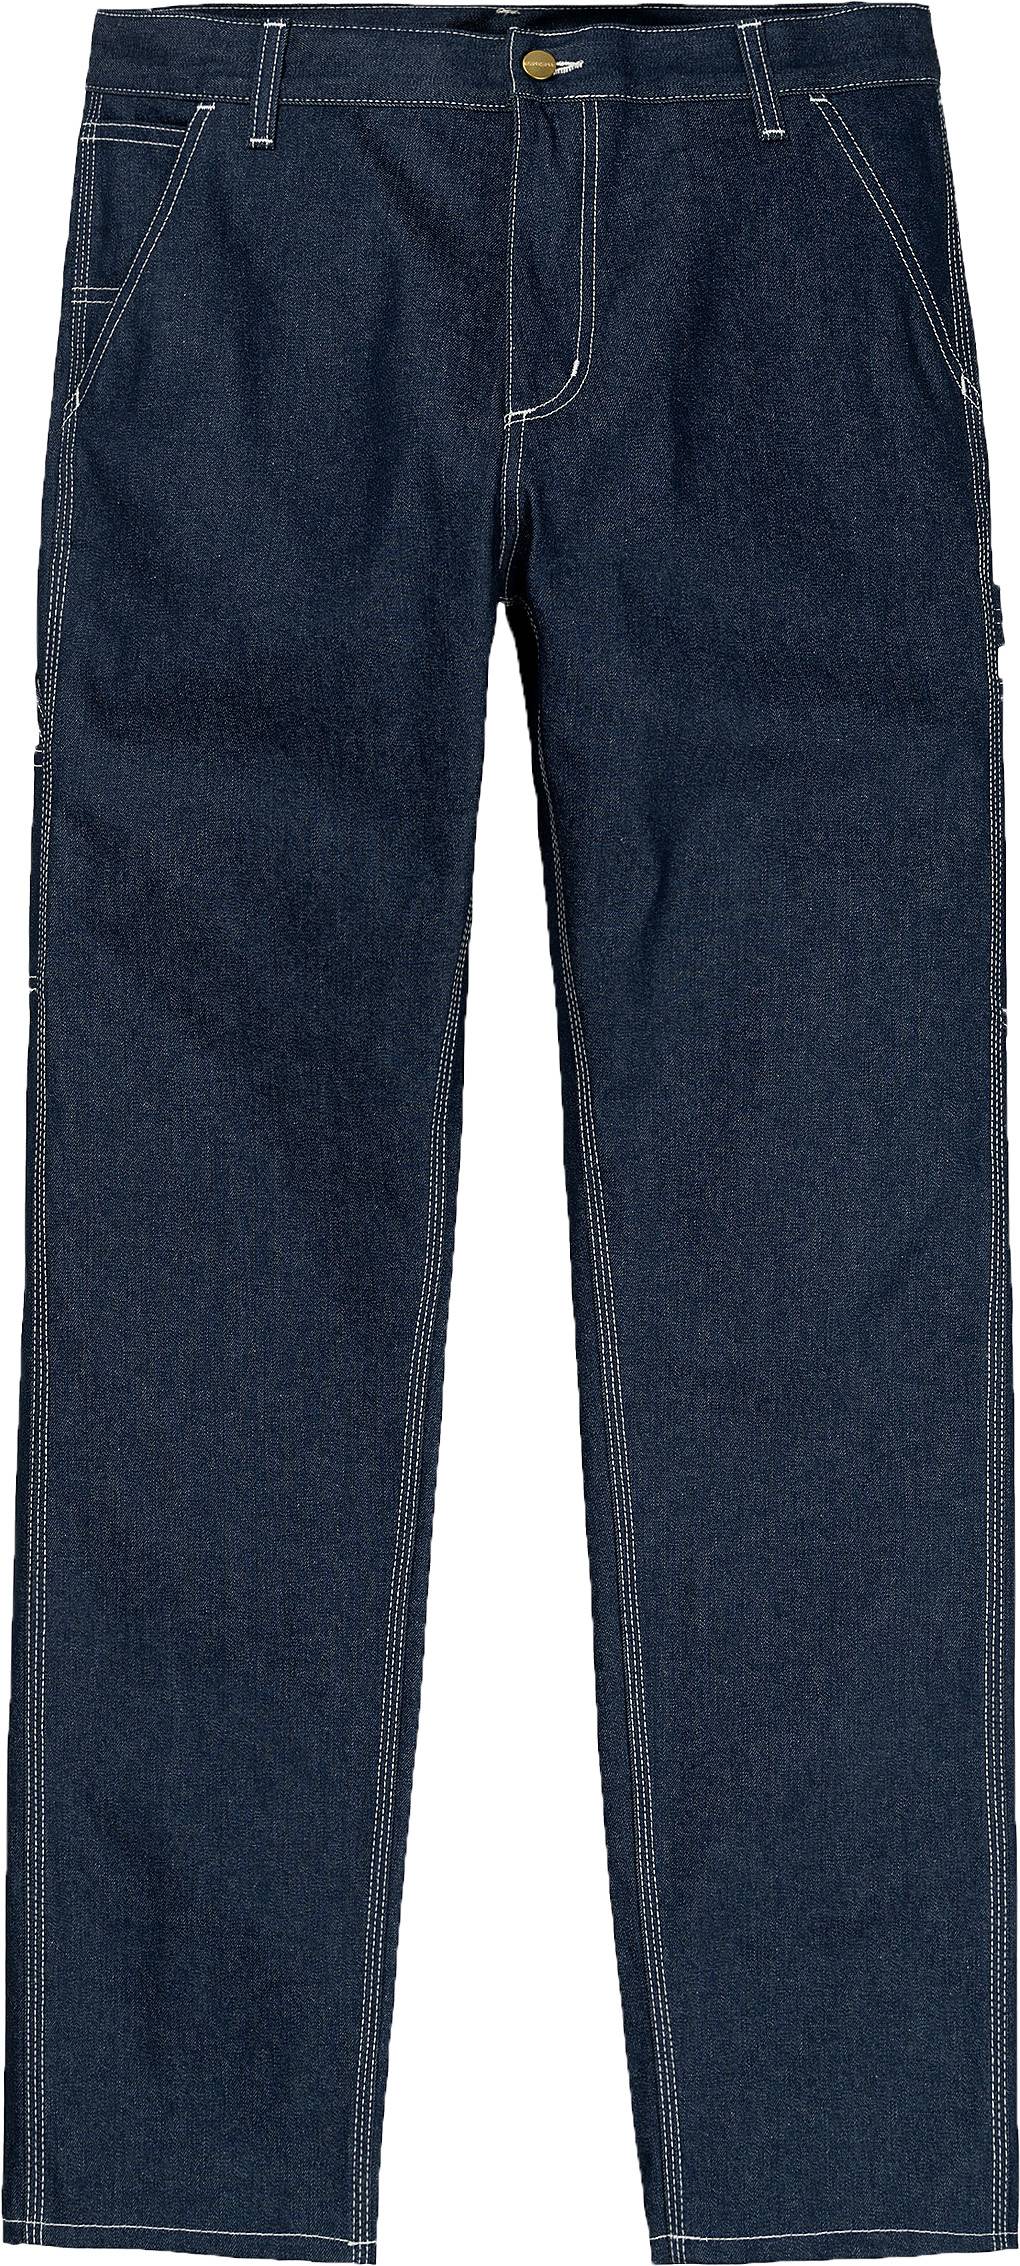  Carhartt Wip Jeans Ruck Single Knee Pant Blue Rigid Uomo - 2